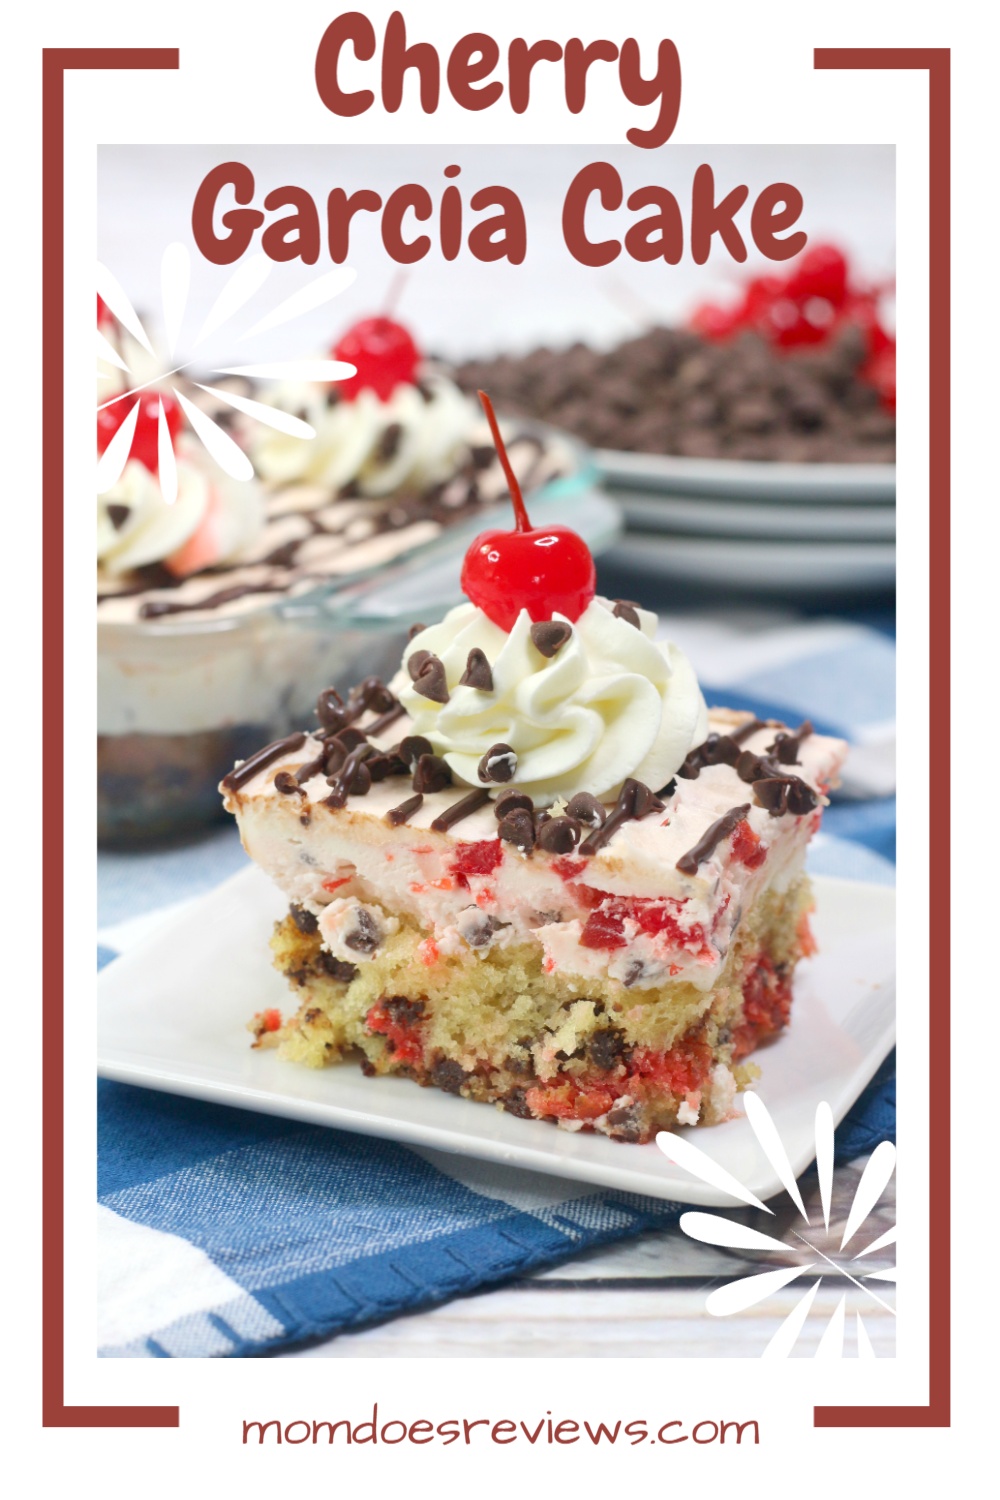 Cherry Garcia Cake Recipe